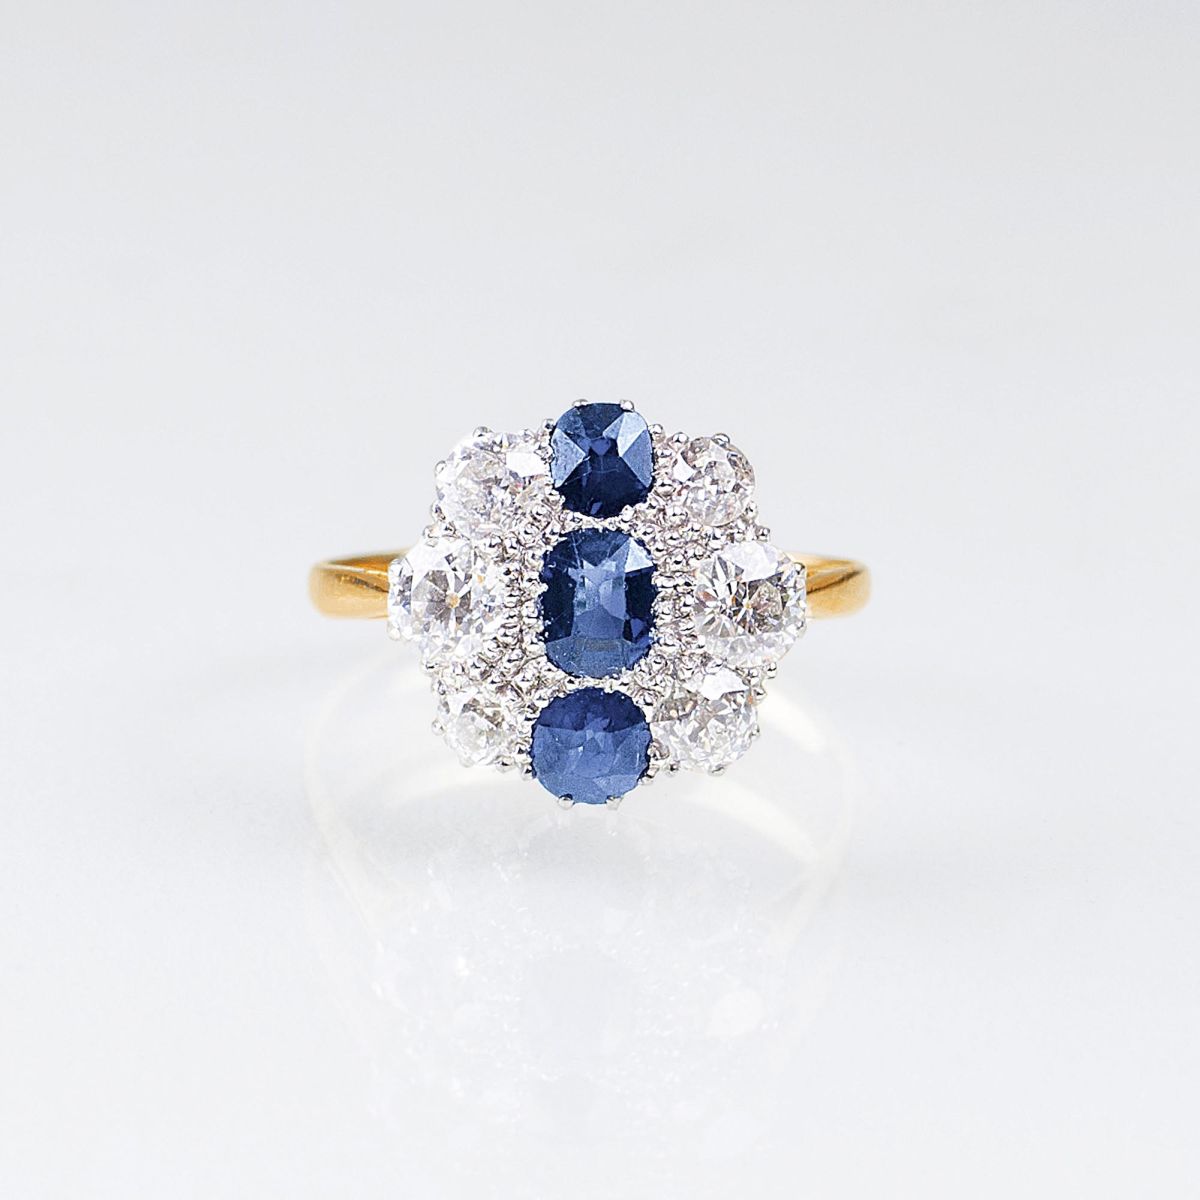 An Art Nouveau Diamond Sapphire Ring